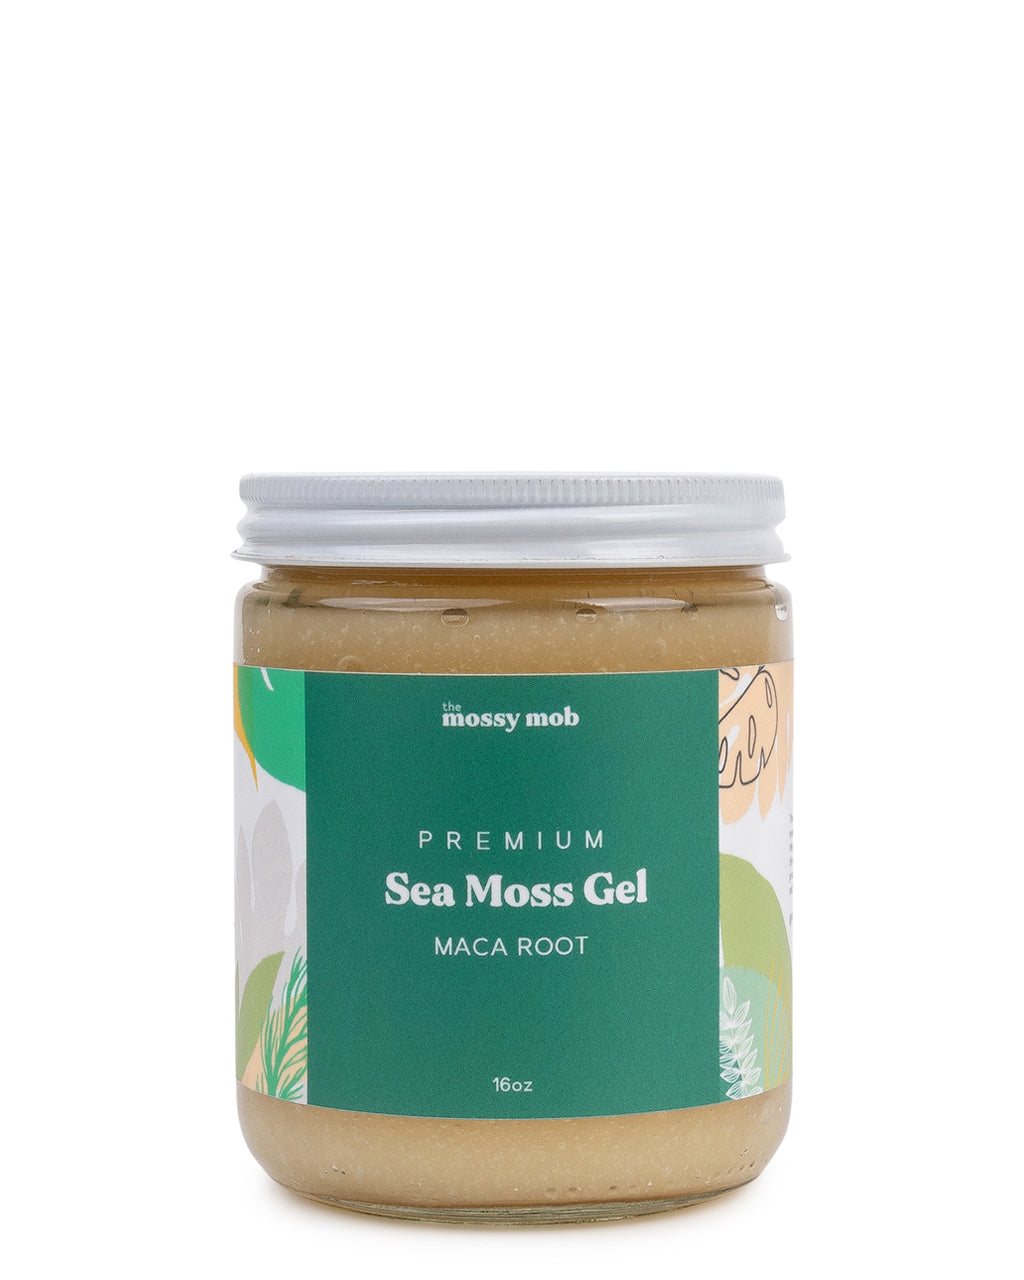 Sexual Healing: Maca Root Wildcrafted Irish Sea Moss Gel – themossymob